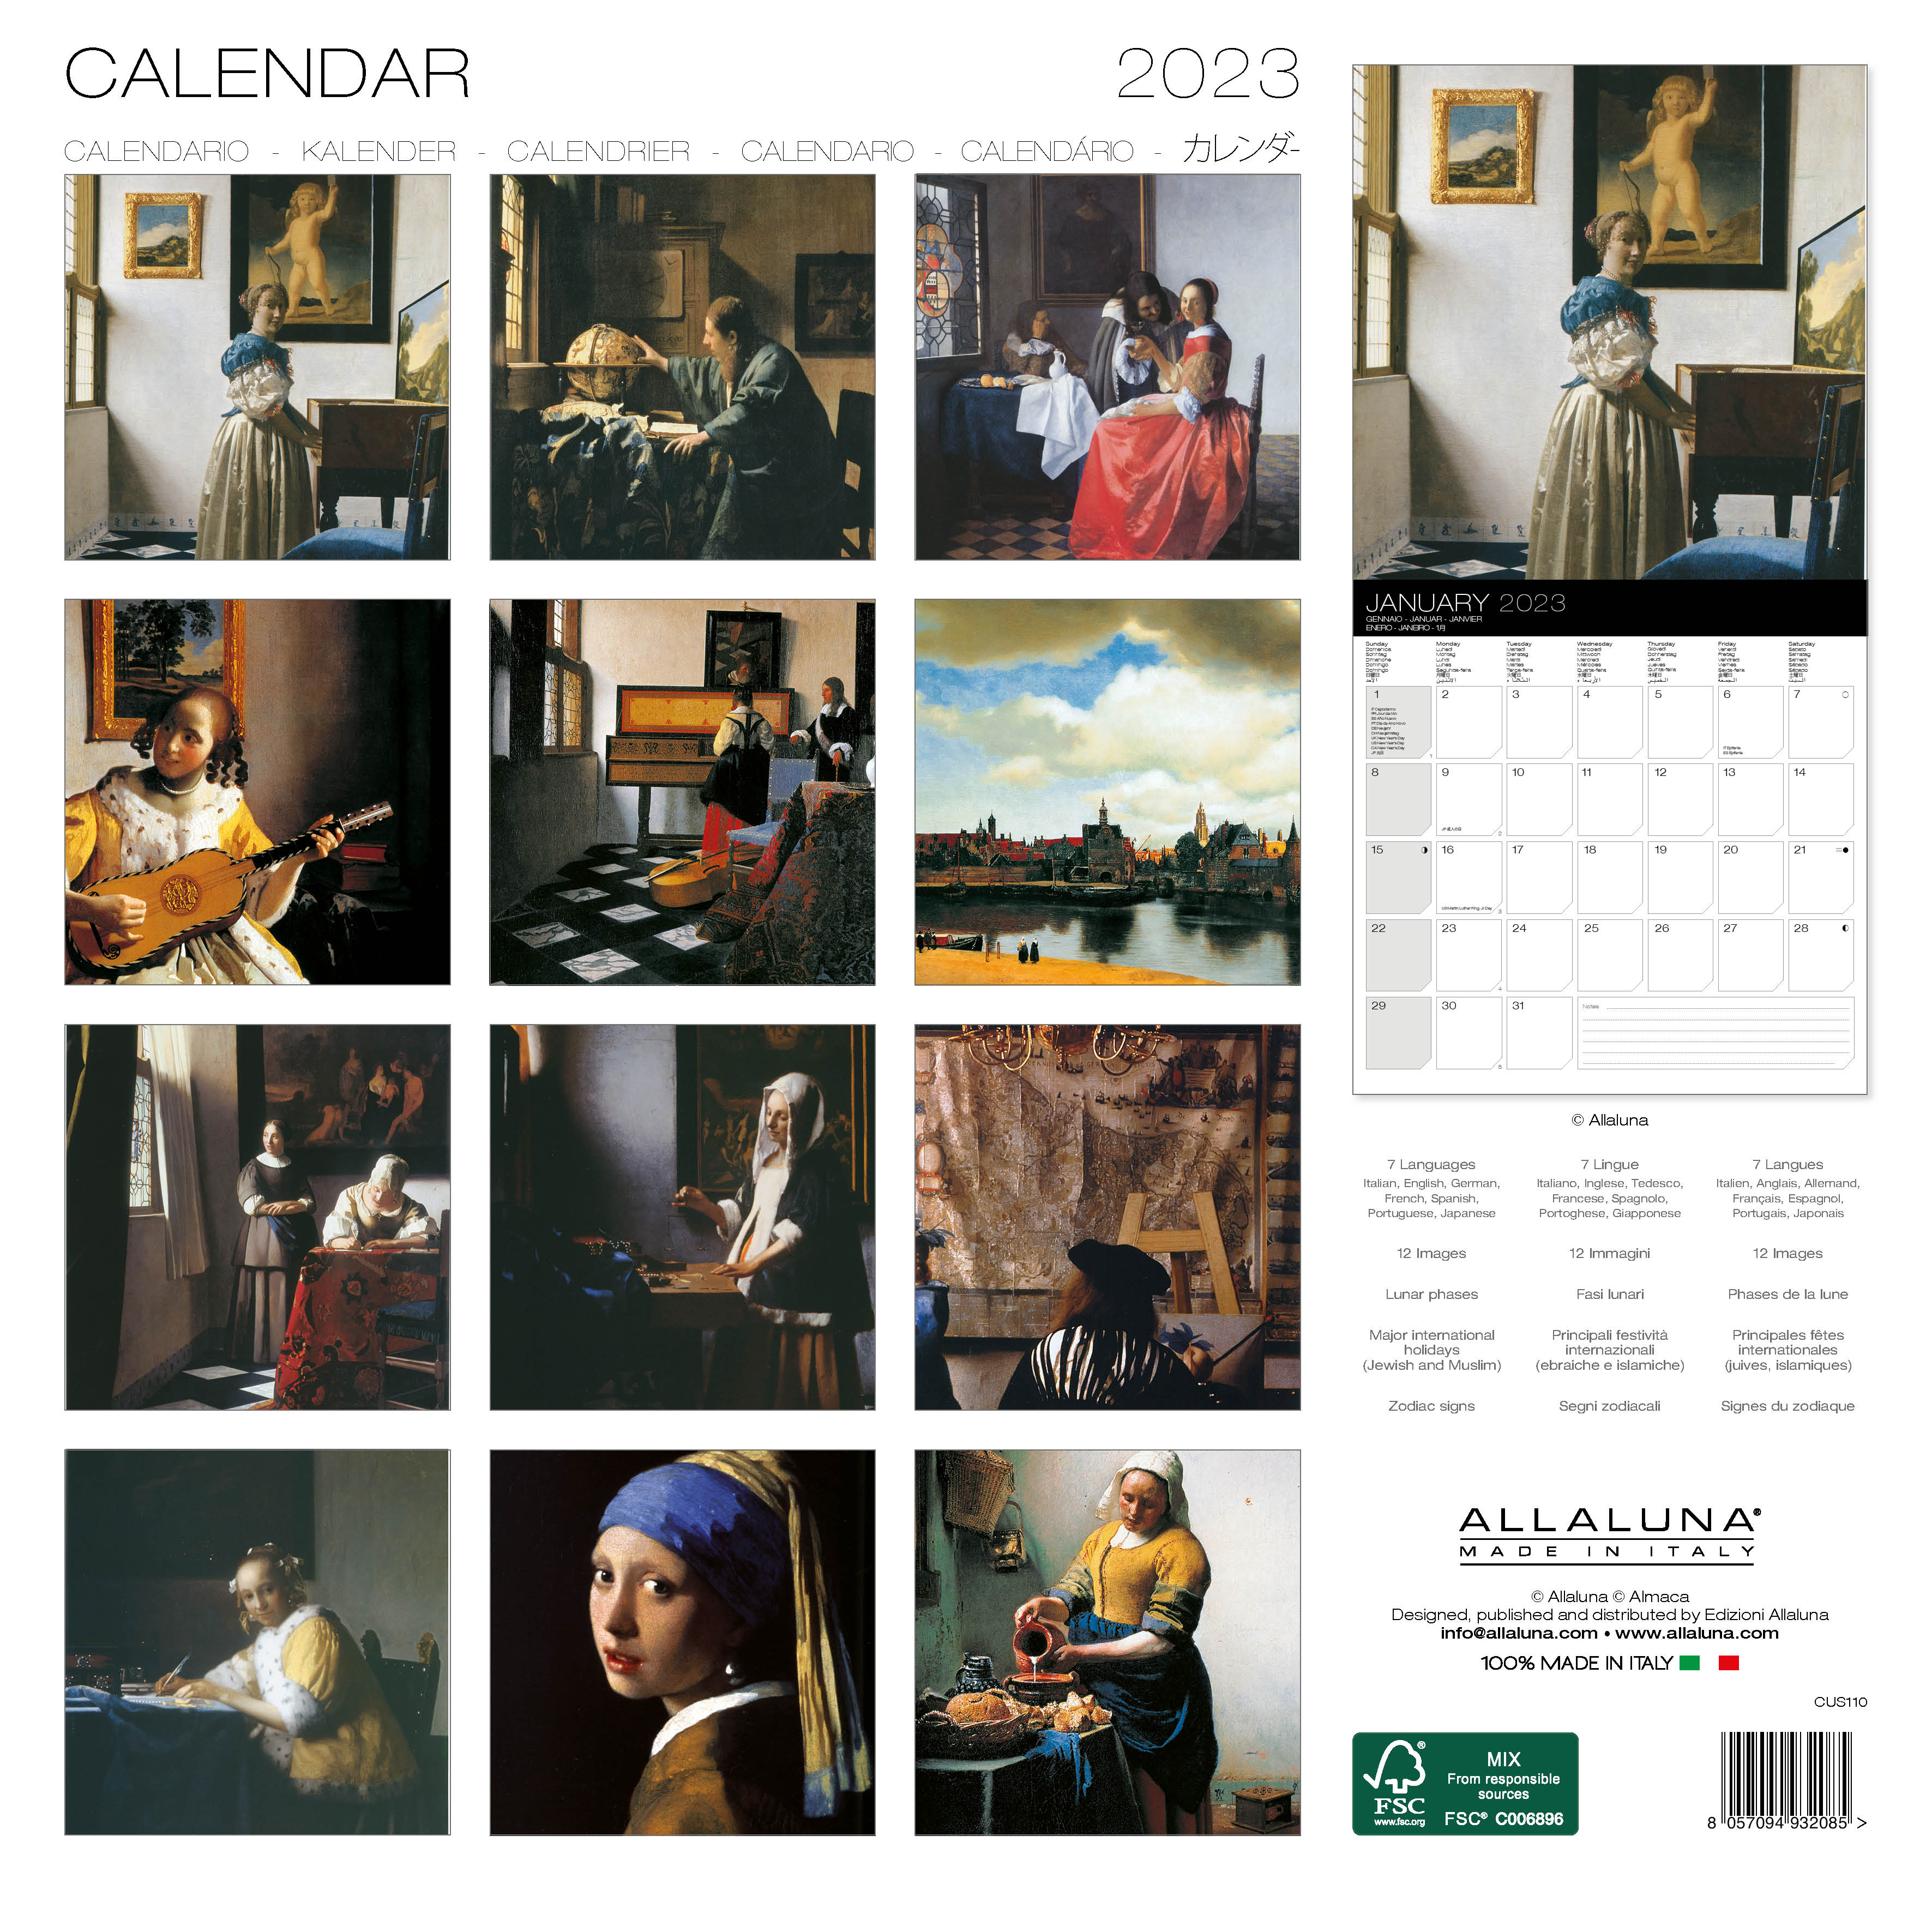 2023 Vermeer - Square Wall Calendar